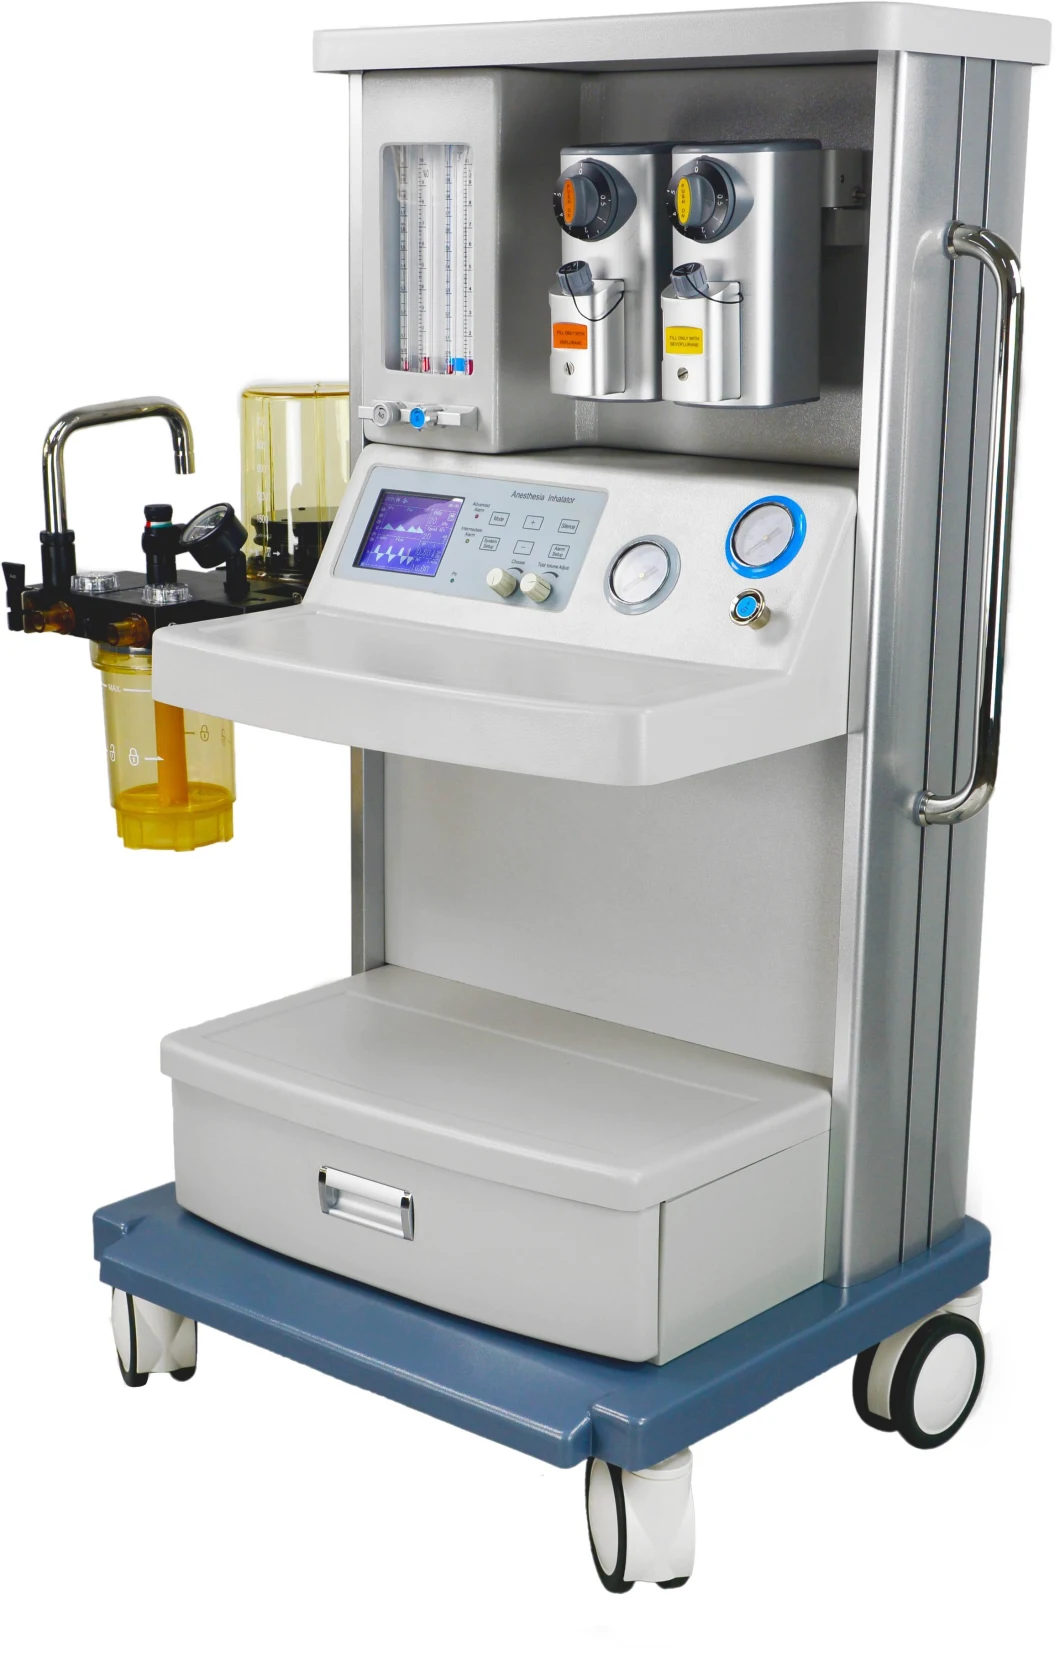 ICU Advanced Hot Sale Cheap Price Anesthesia Machine with 2 Vaporizers (JINLING01B Advanced)